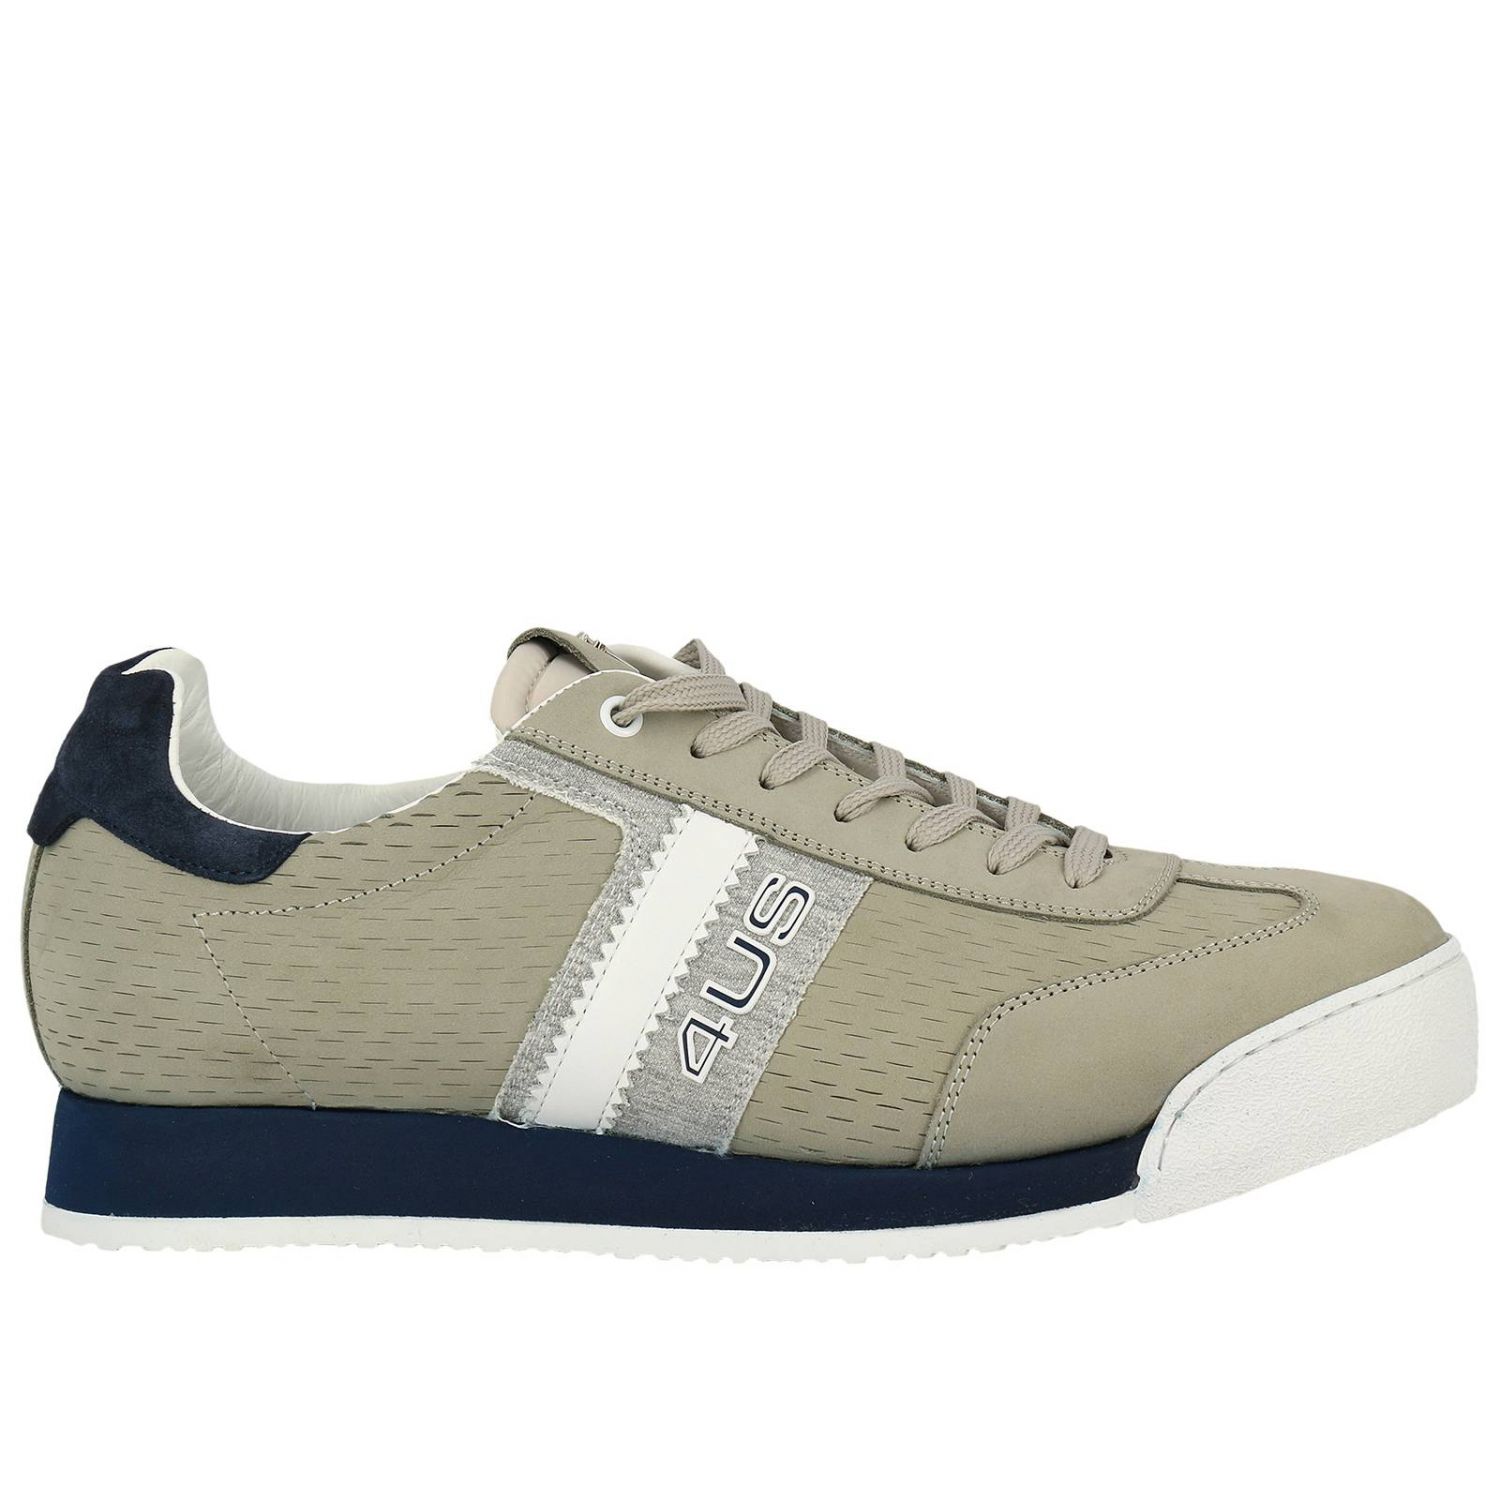 Paciotti 4Us Outlet: Shoes men - Grey | Sneakers Paciotti 4Us G1FTNB ...